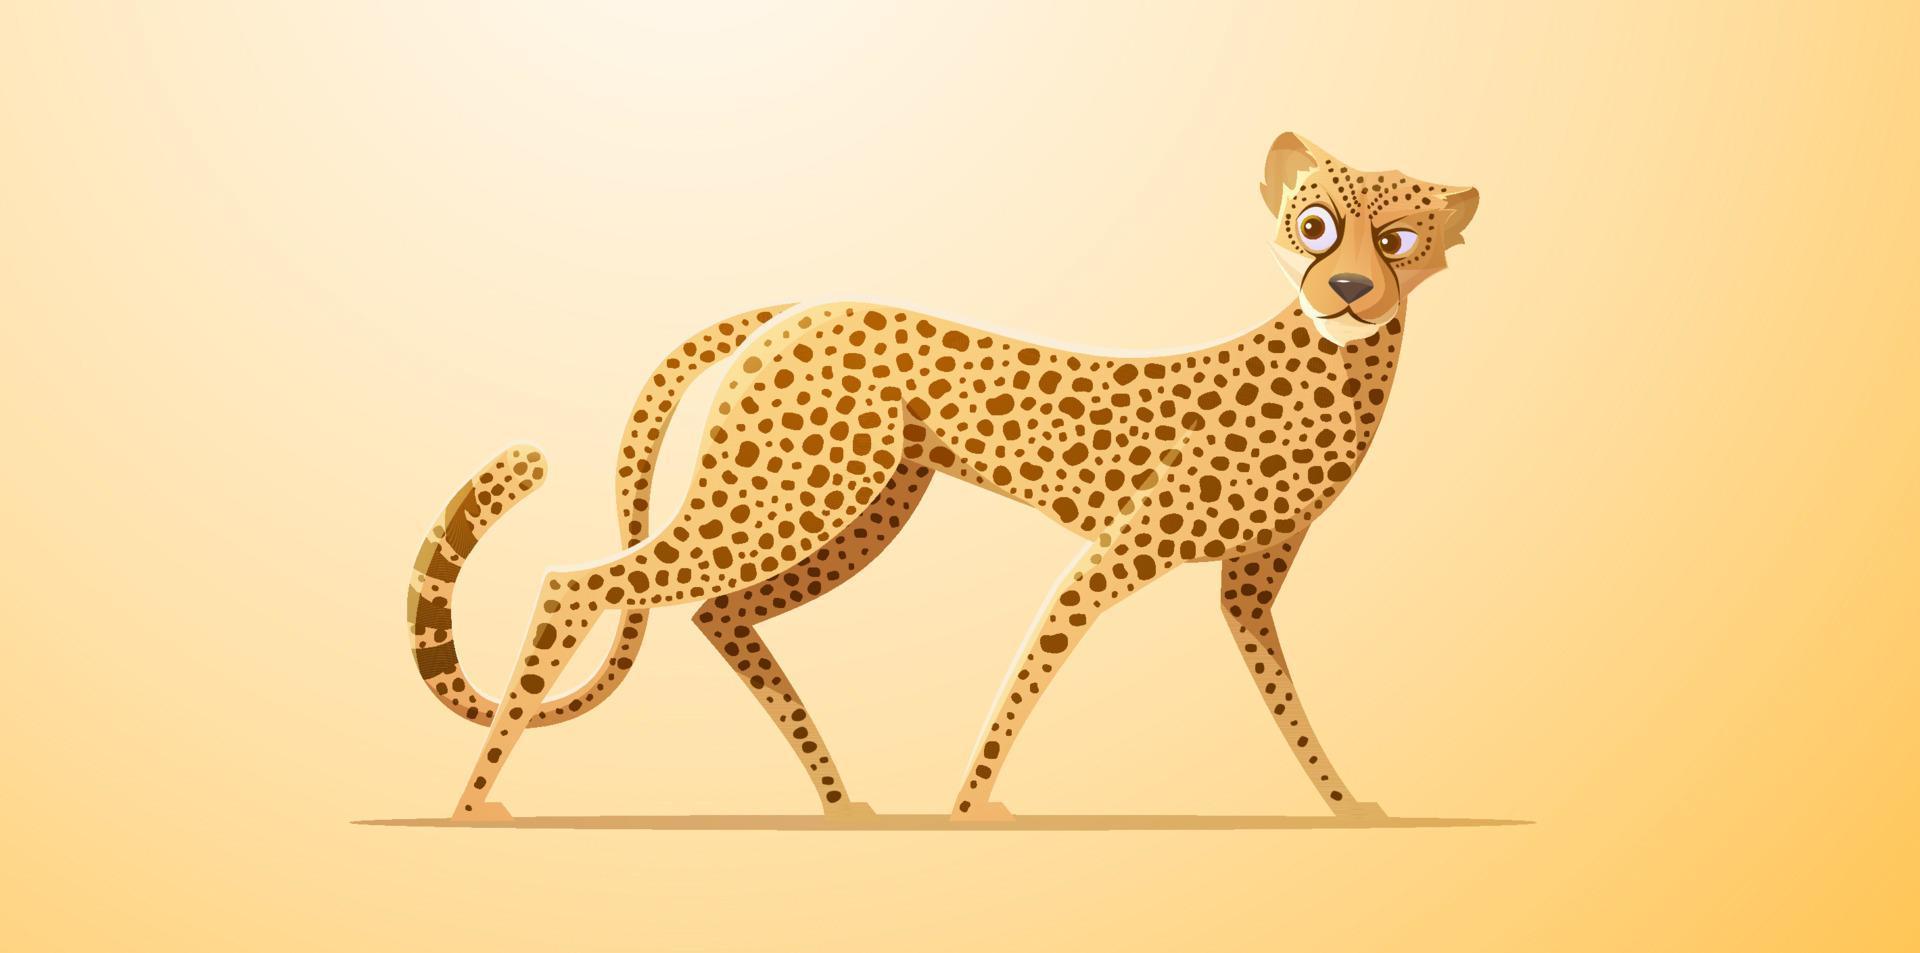 Jachtluipaard, Afrikaanse gepard wandelen vector